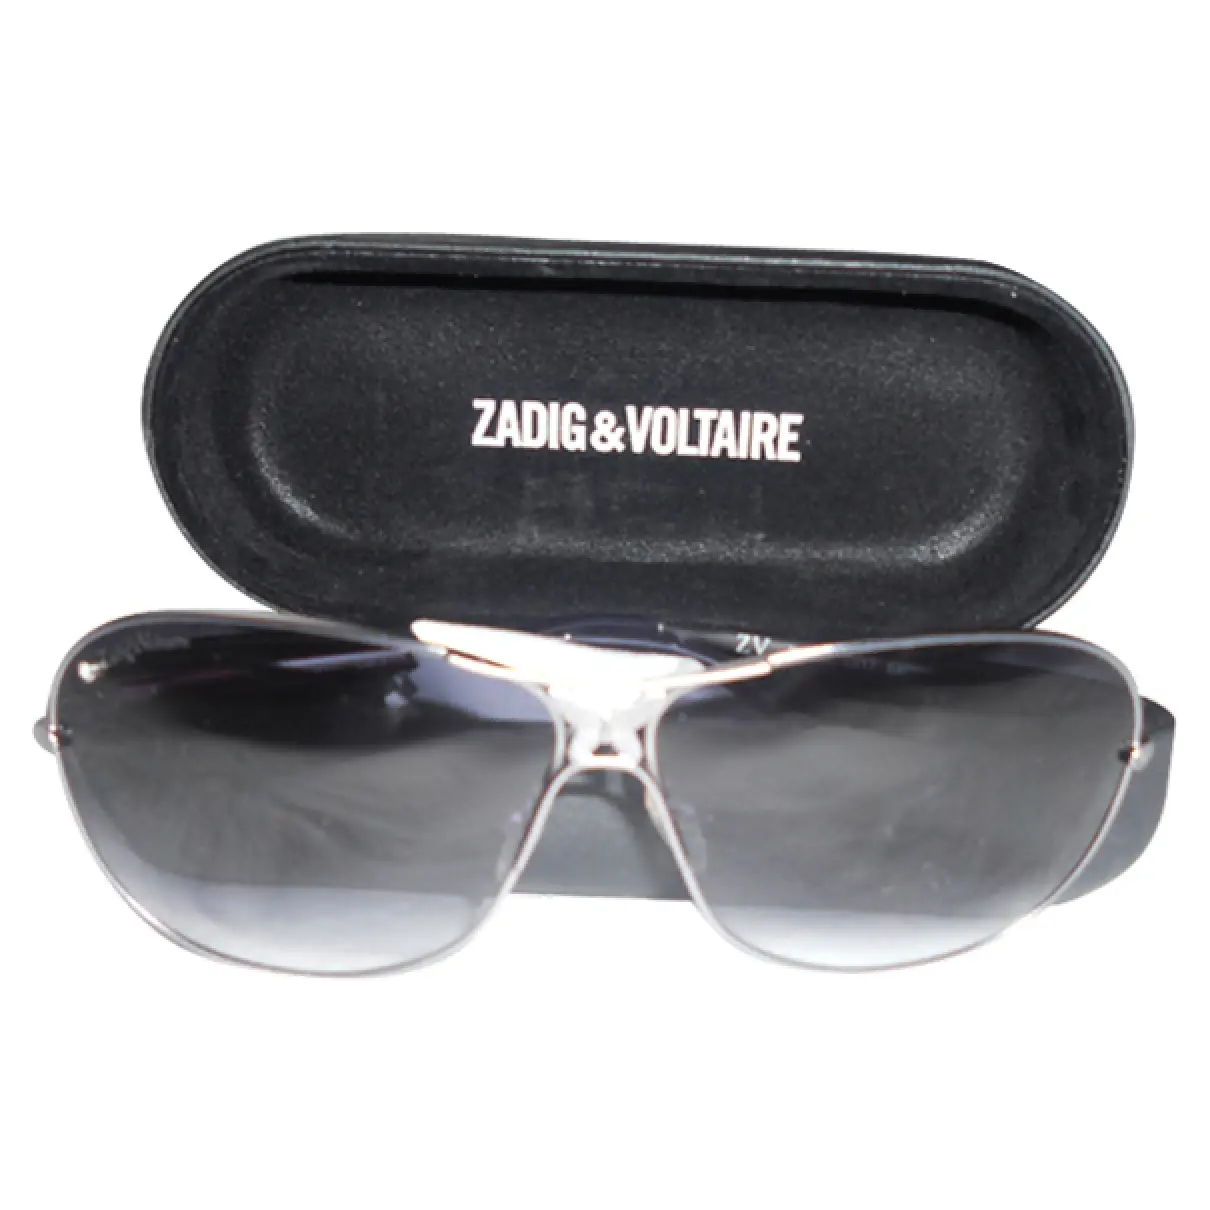 Zadig & Voltaire Aviator sunglasses for sale